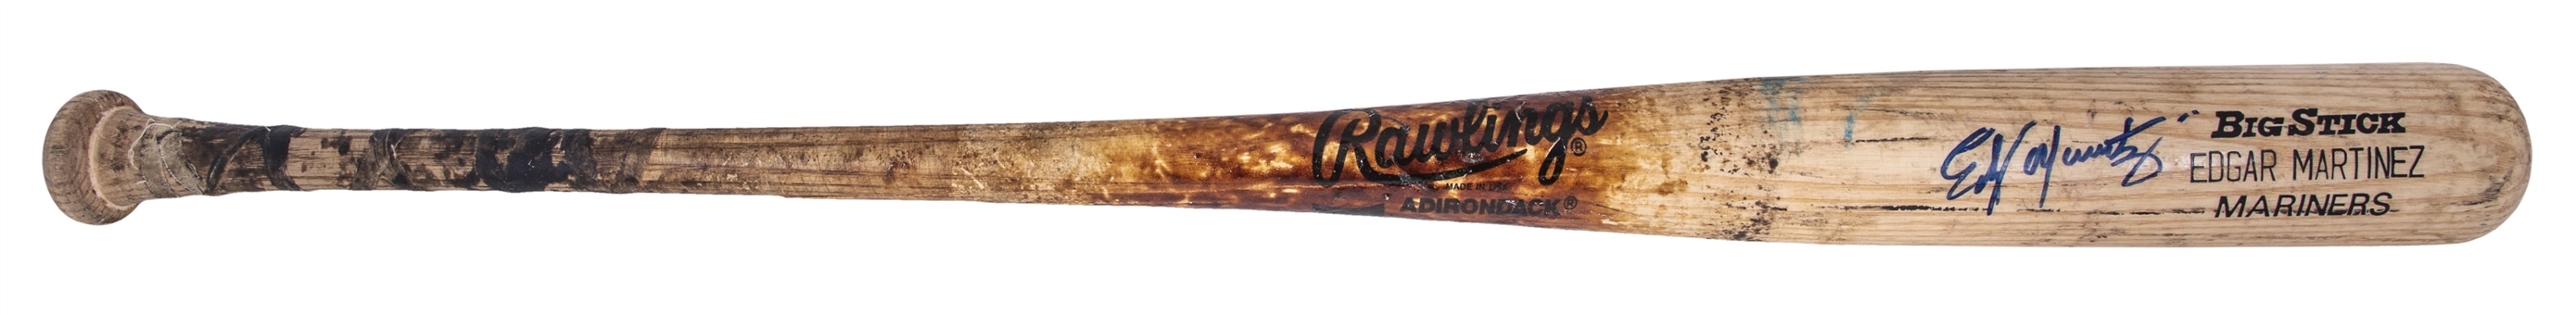 1996 Edgar Martinez Game Used and Signed Big Stick Bat (PSA/DNA GU 9.5 & JSA)